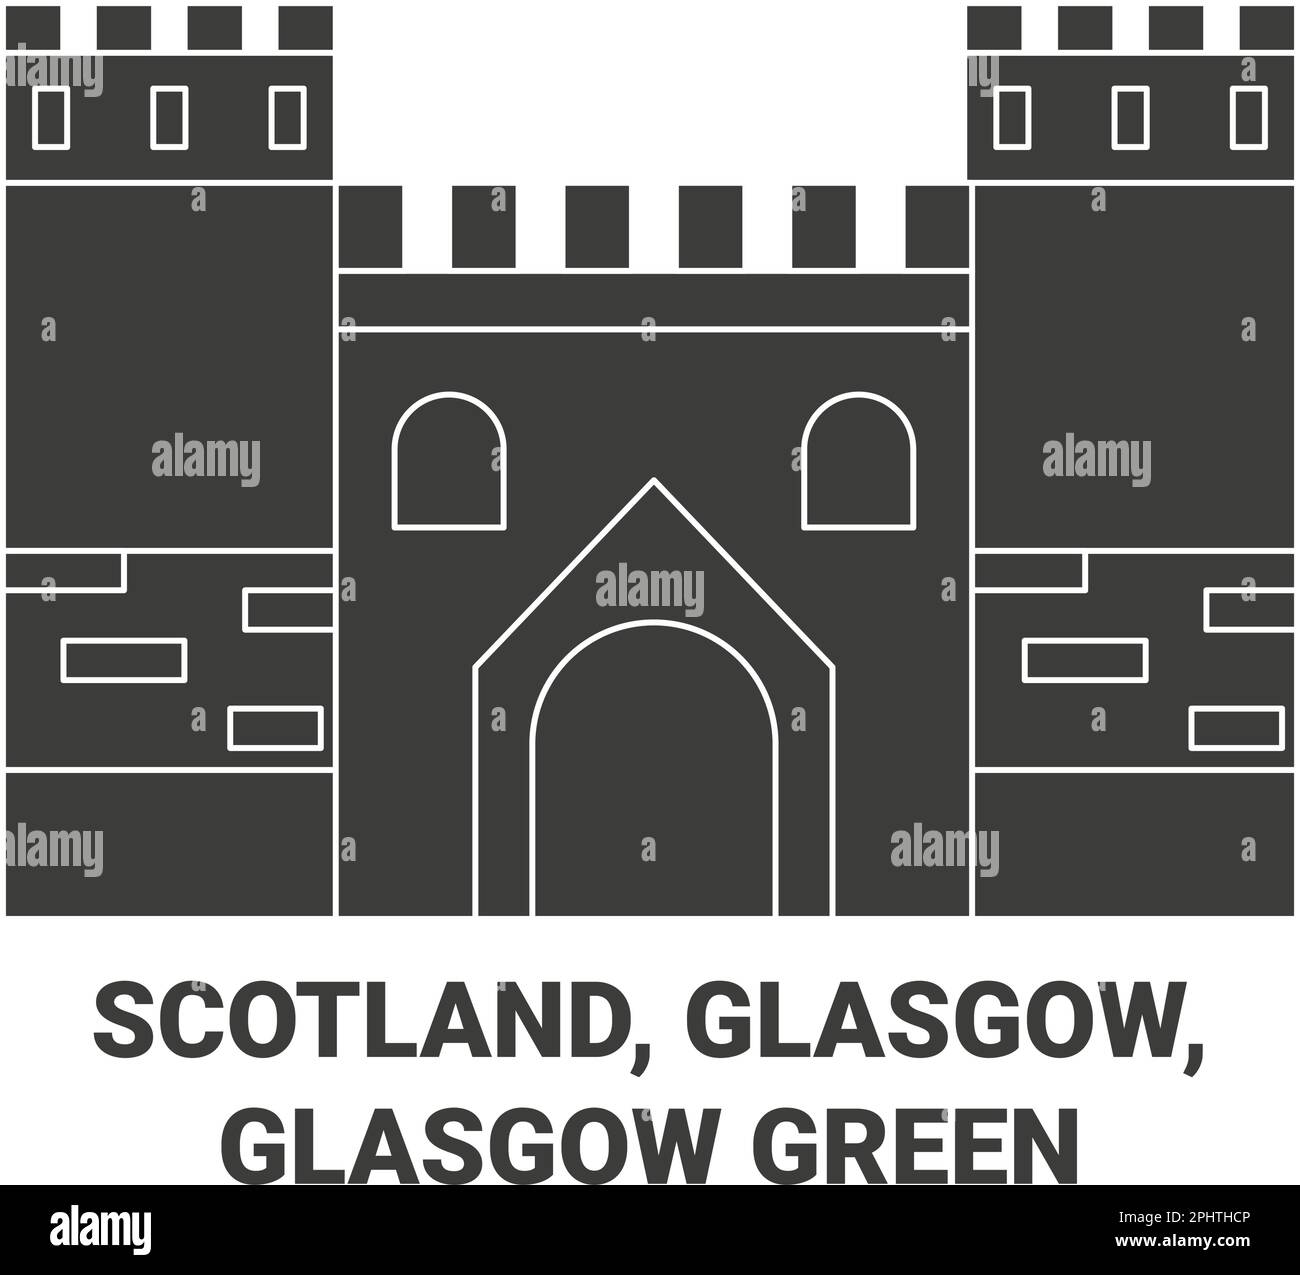 Scotland, Glasgow, Glasgow Green travel landmark vector illustration Stock Vector